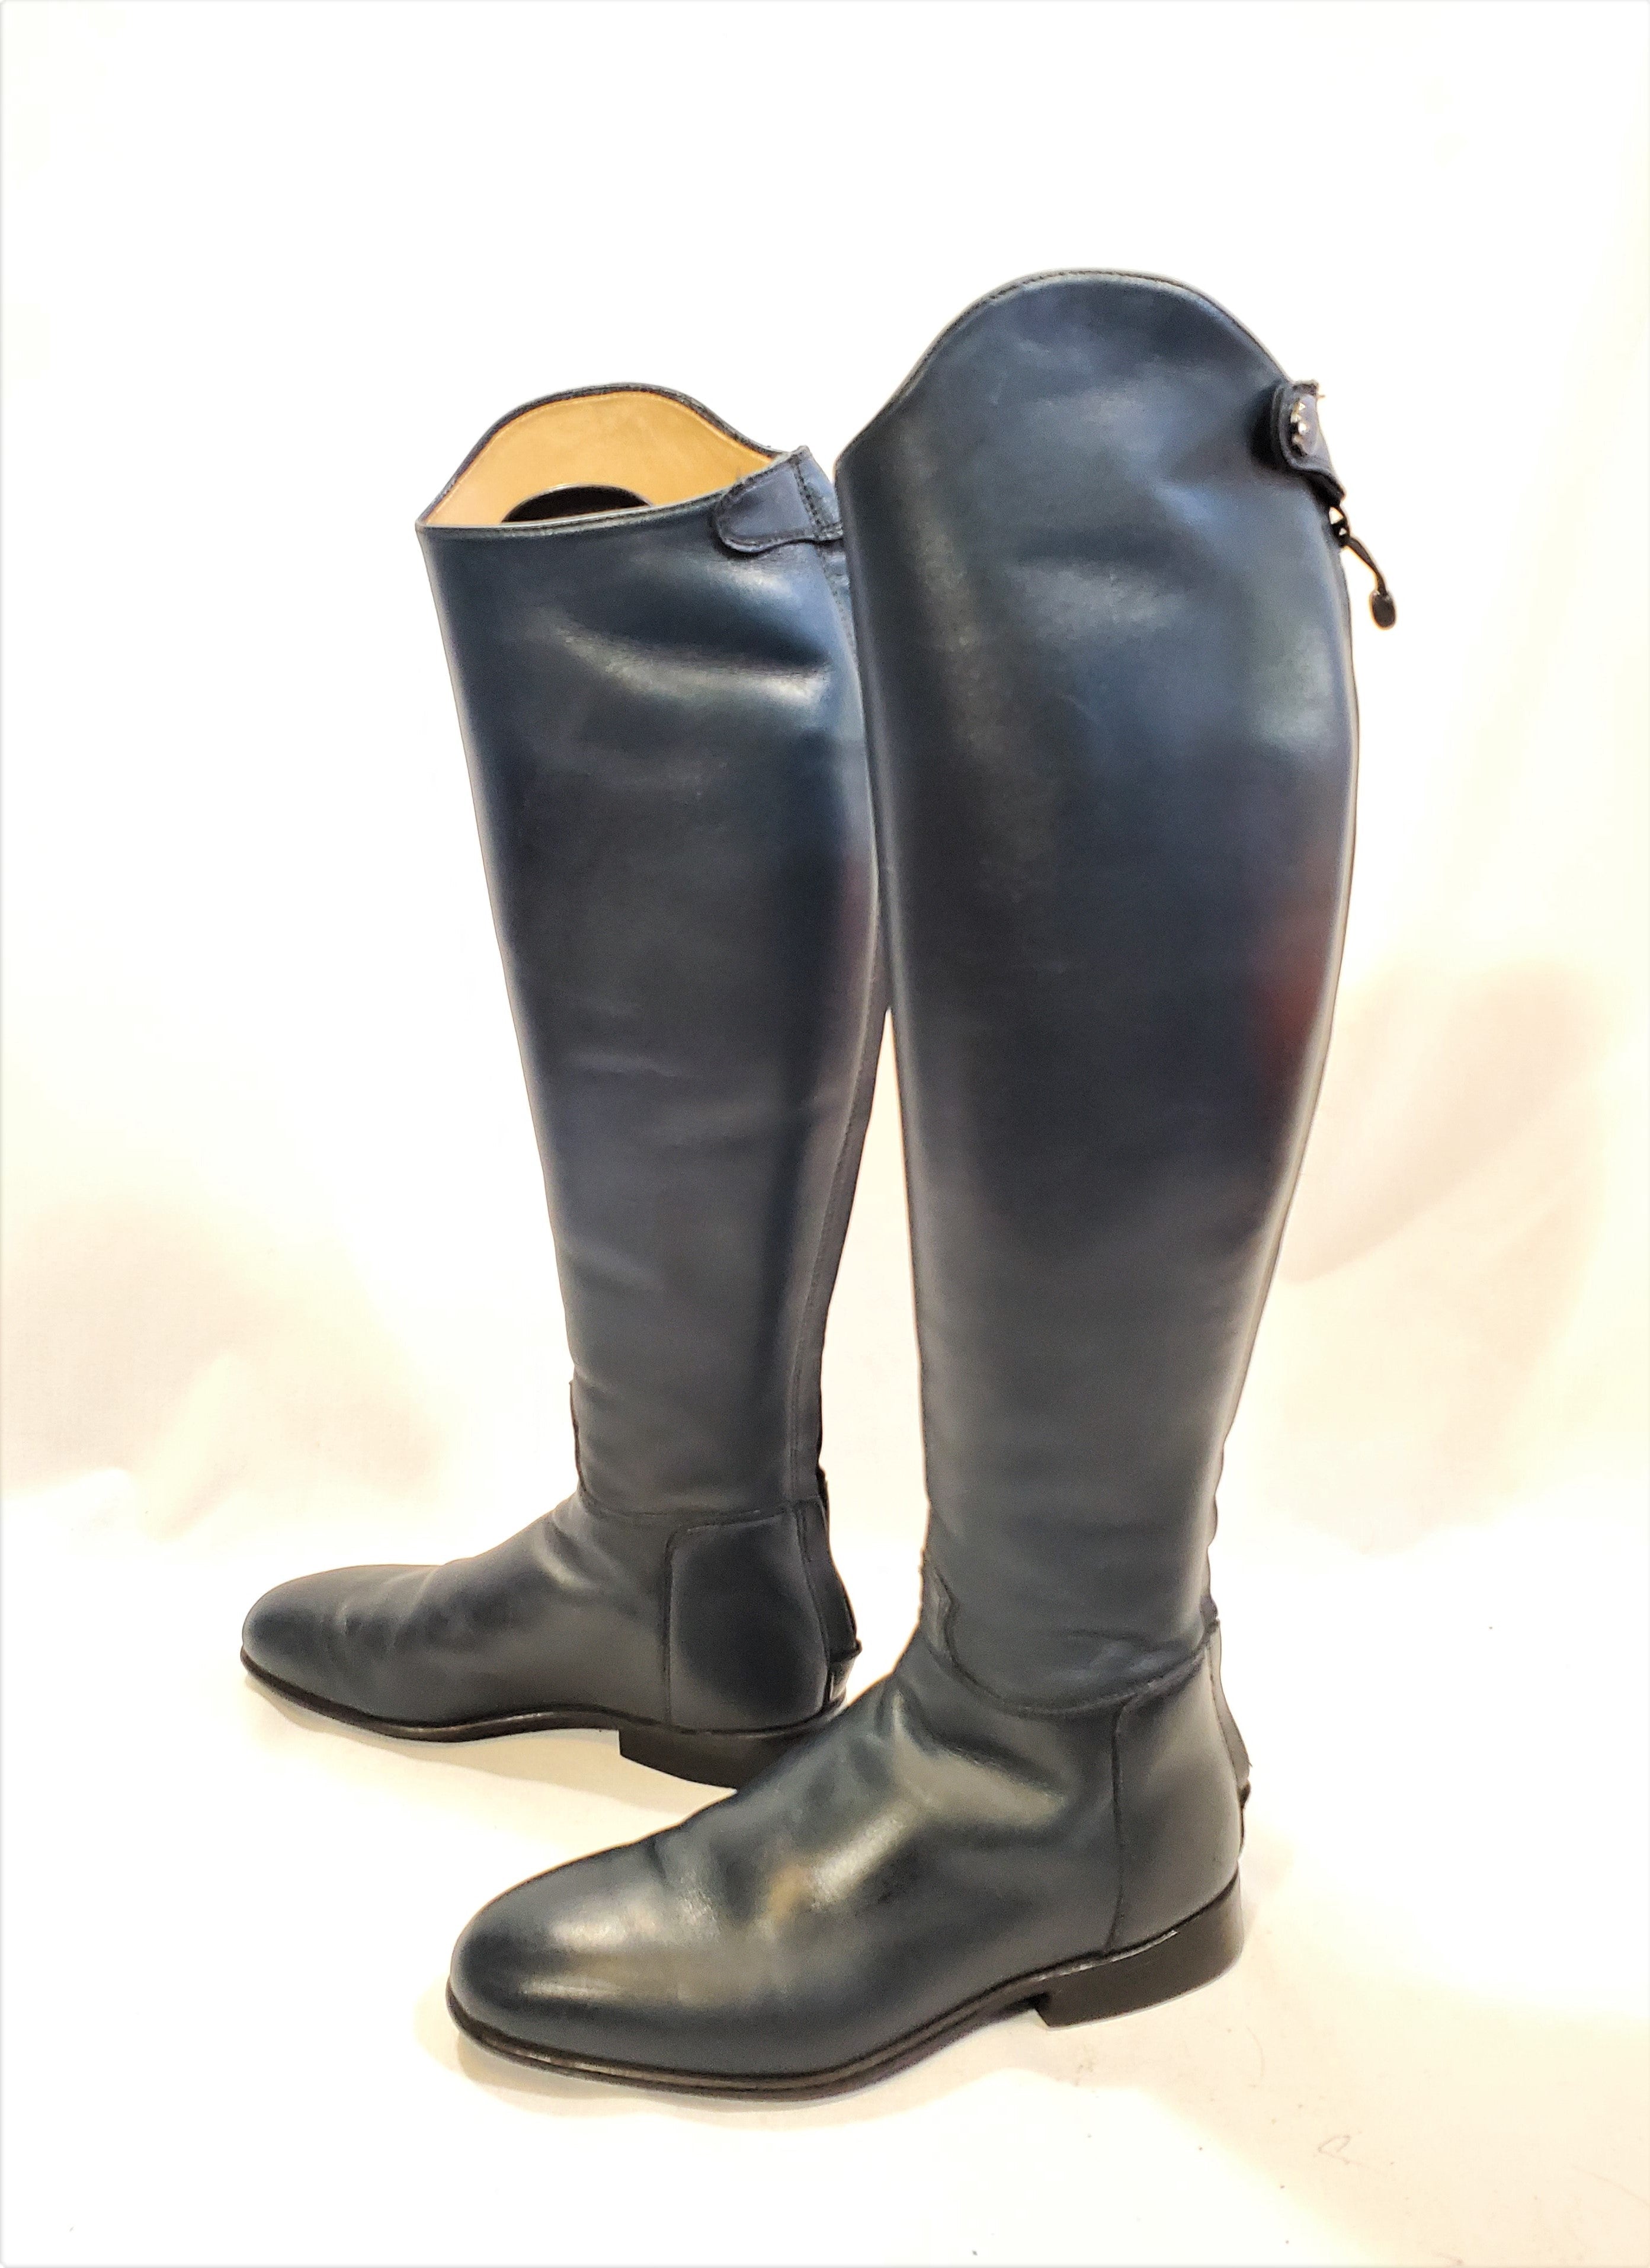 Konig Custom Dress Boots (Indigo Blue) - Women's 6.5/7 Tall